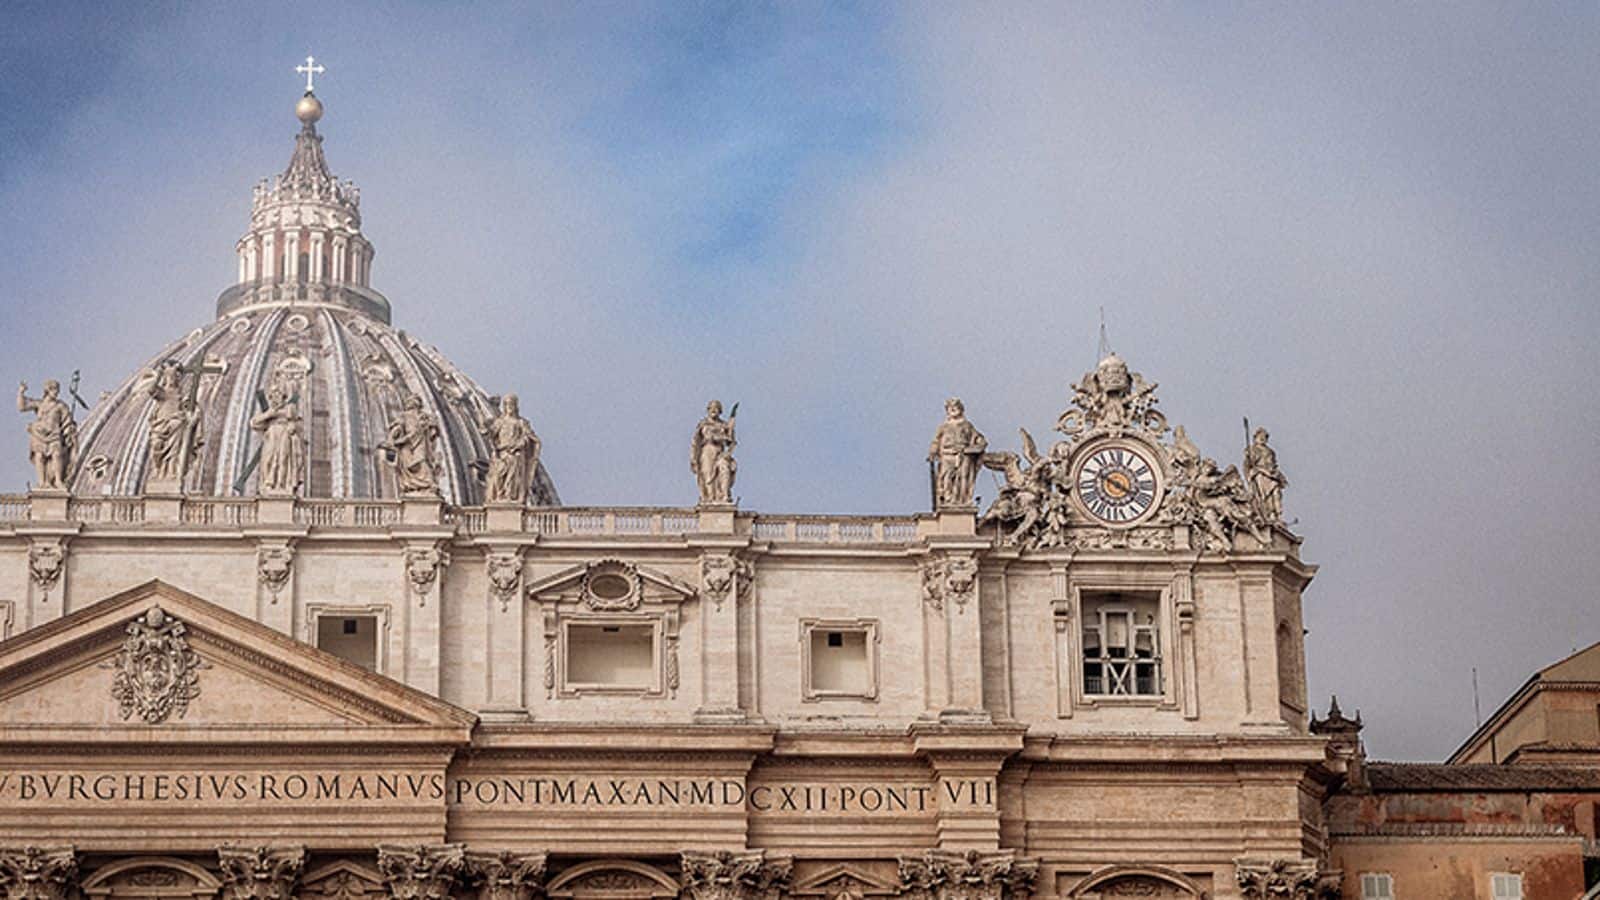 Explore Rome's hidden historical gems